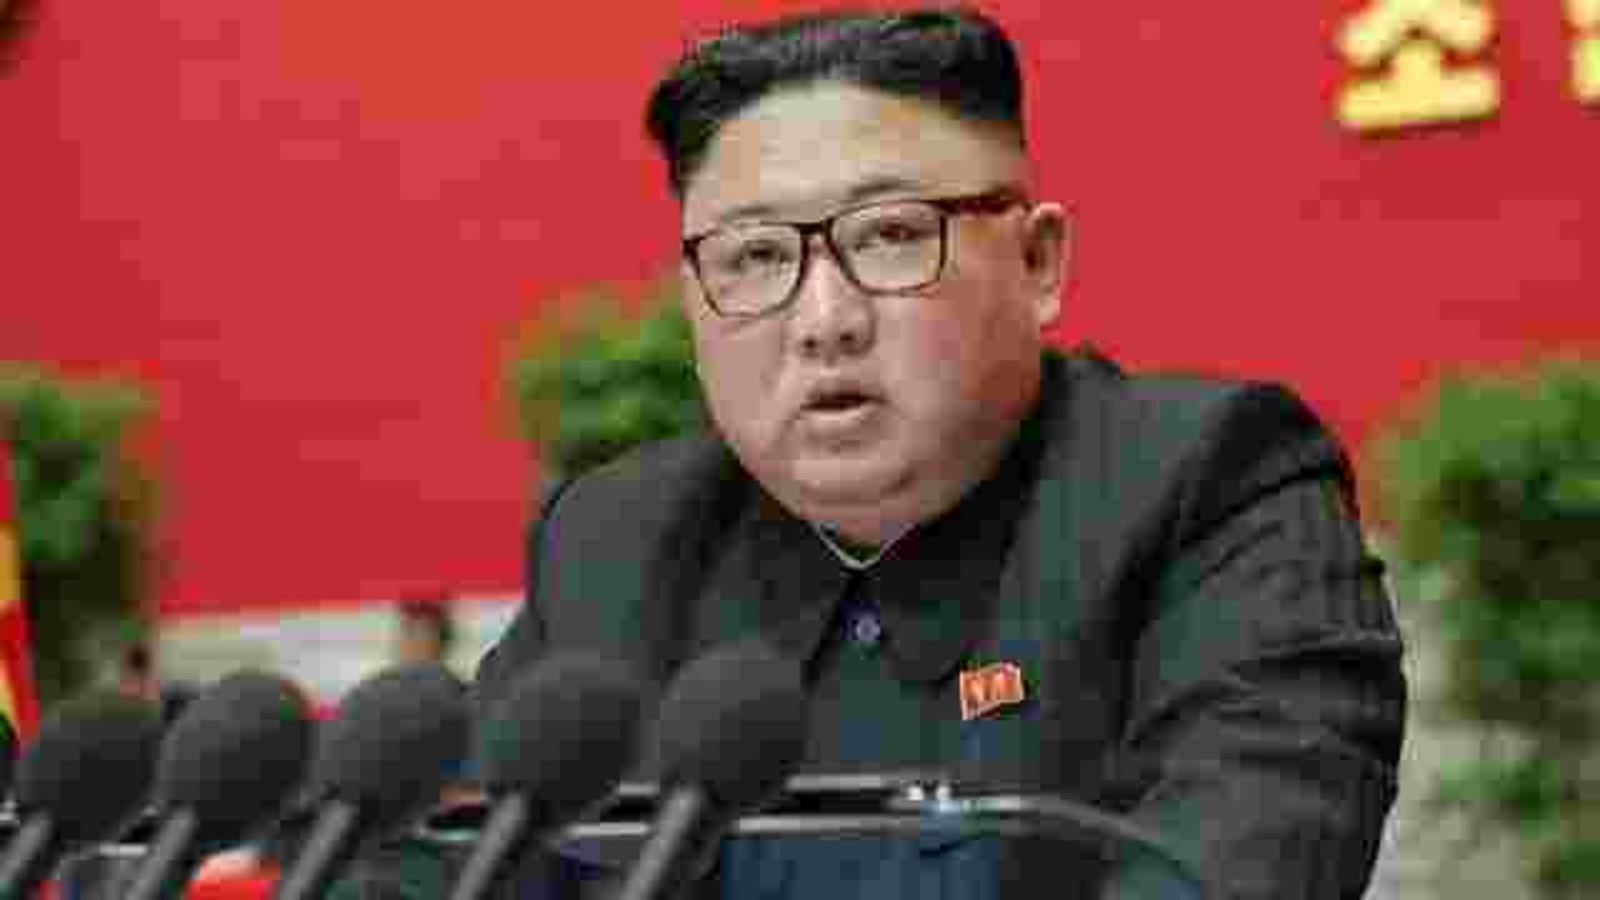 North Korea sees talks as way to advance nuclear program, says US intel ...